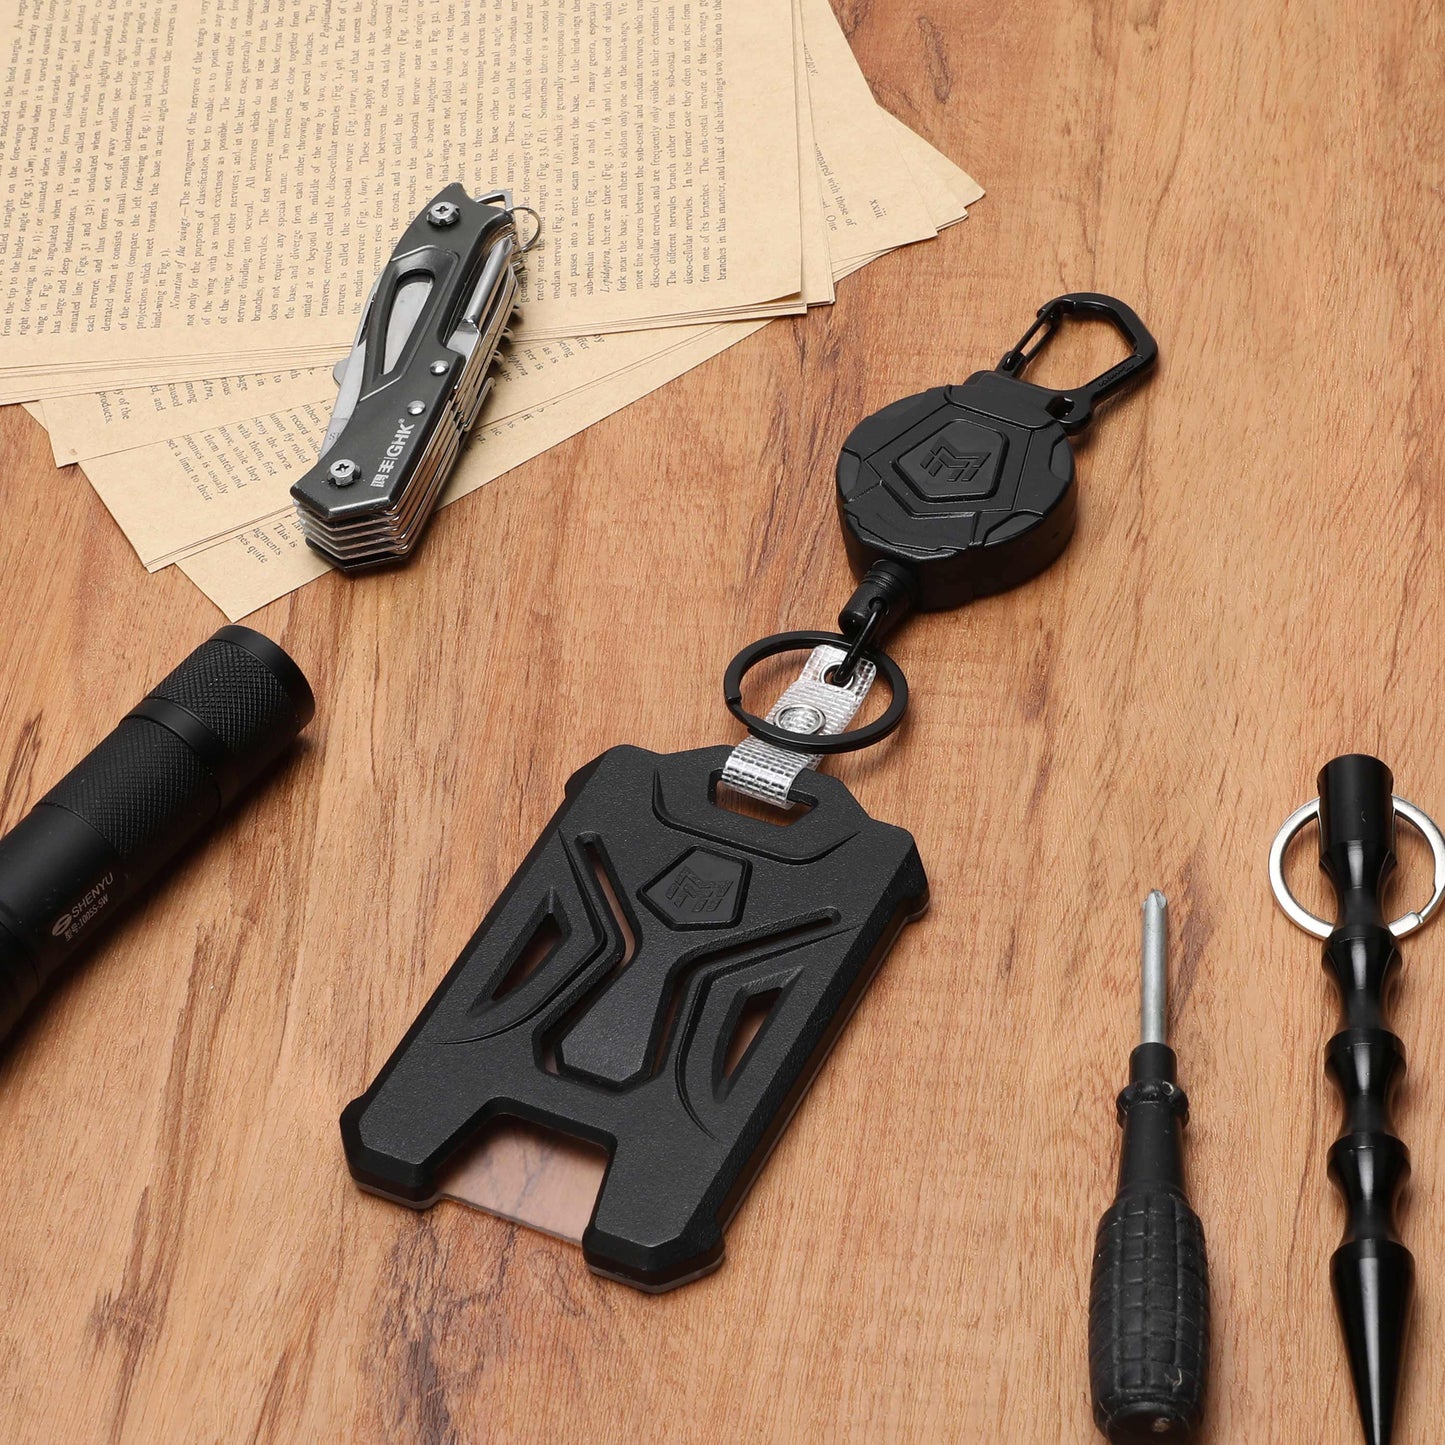 Retractable-Holder-Carabiner-Keychain-Tactical, usage scenario, Desktop, utility knife, torch, screwdriver, sharp objects, paper